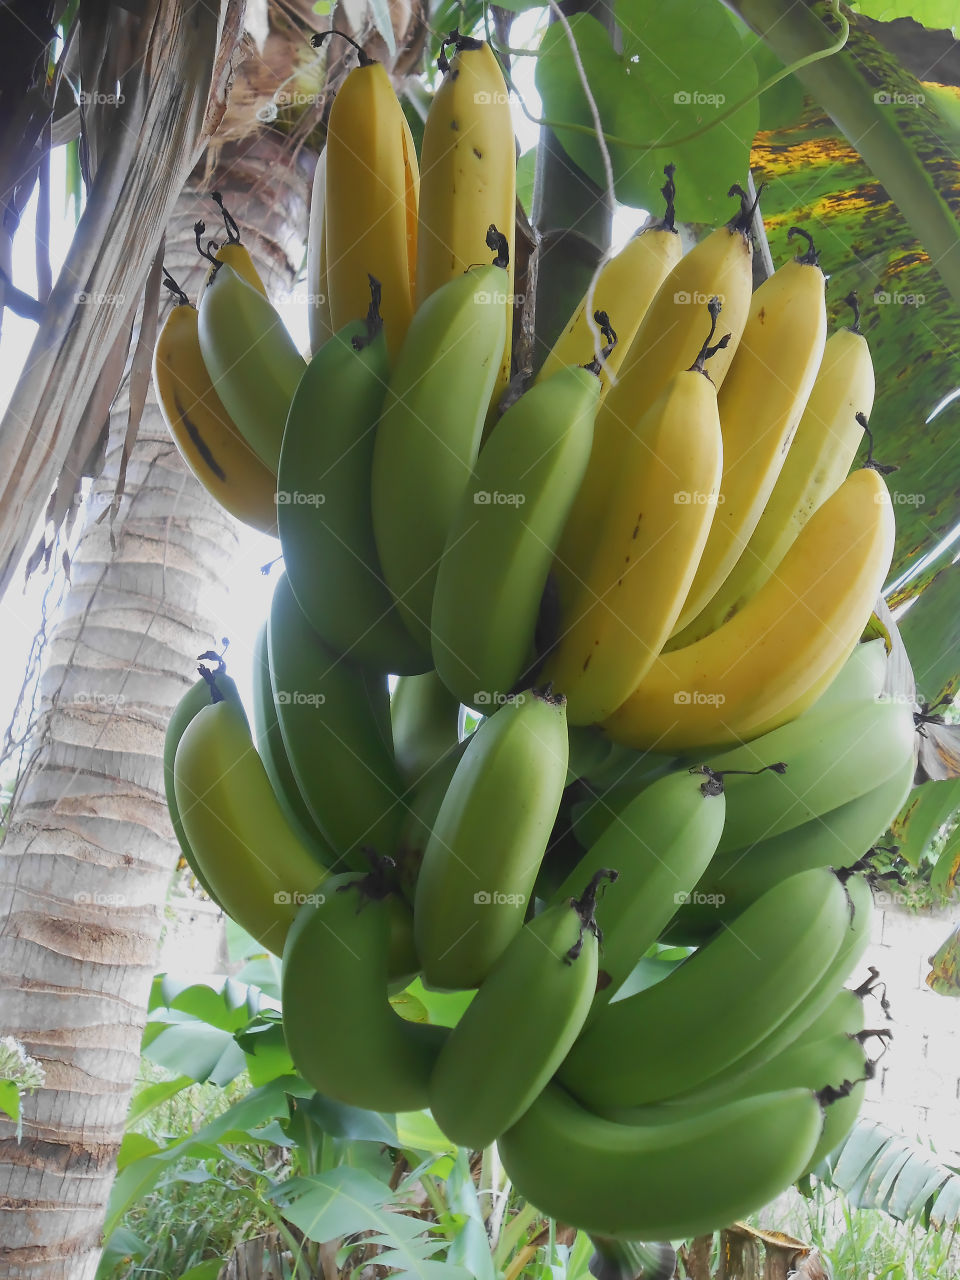 Hanging Bunch of Bananas